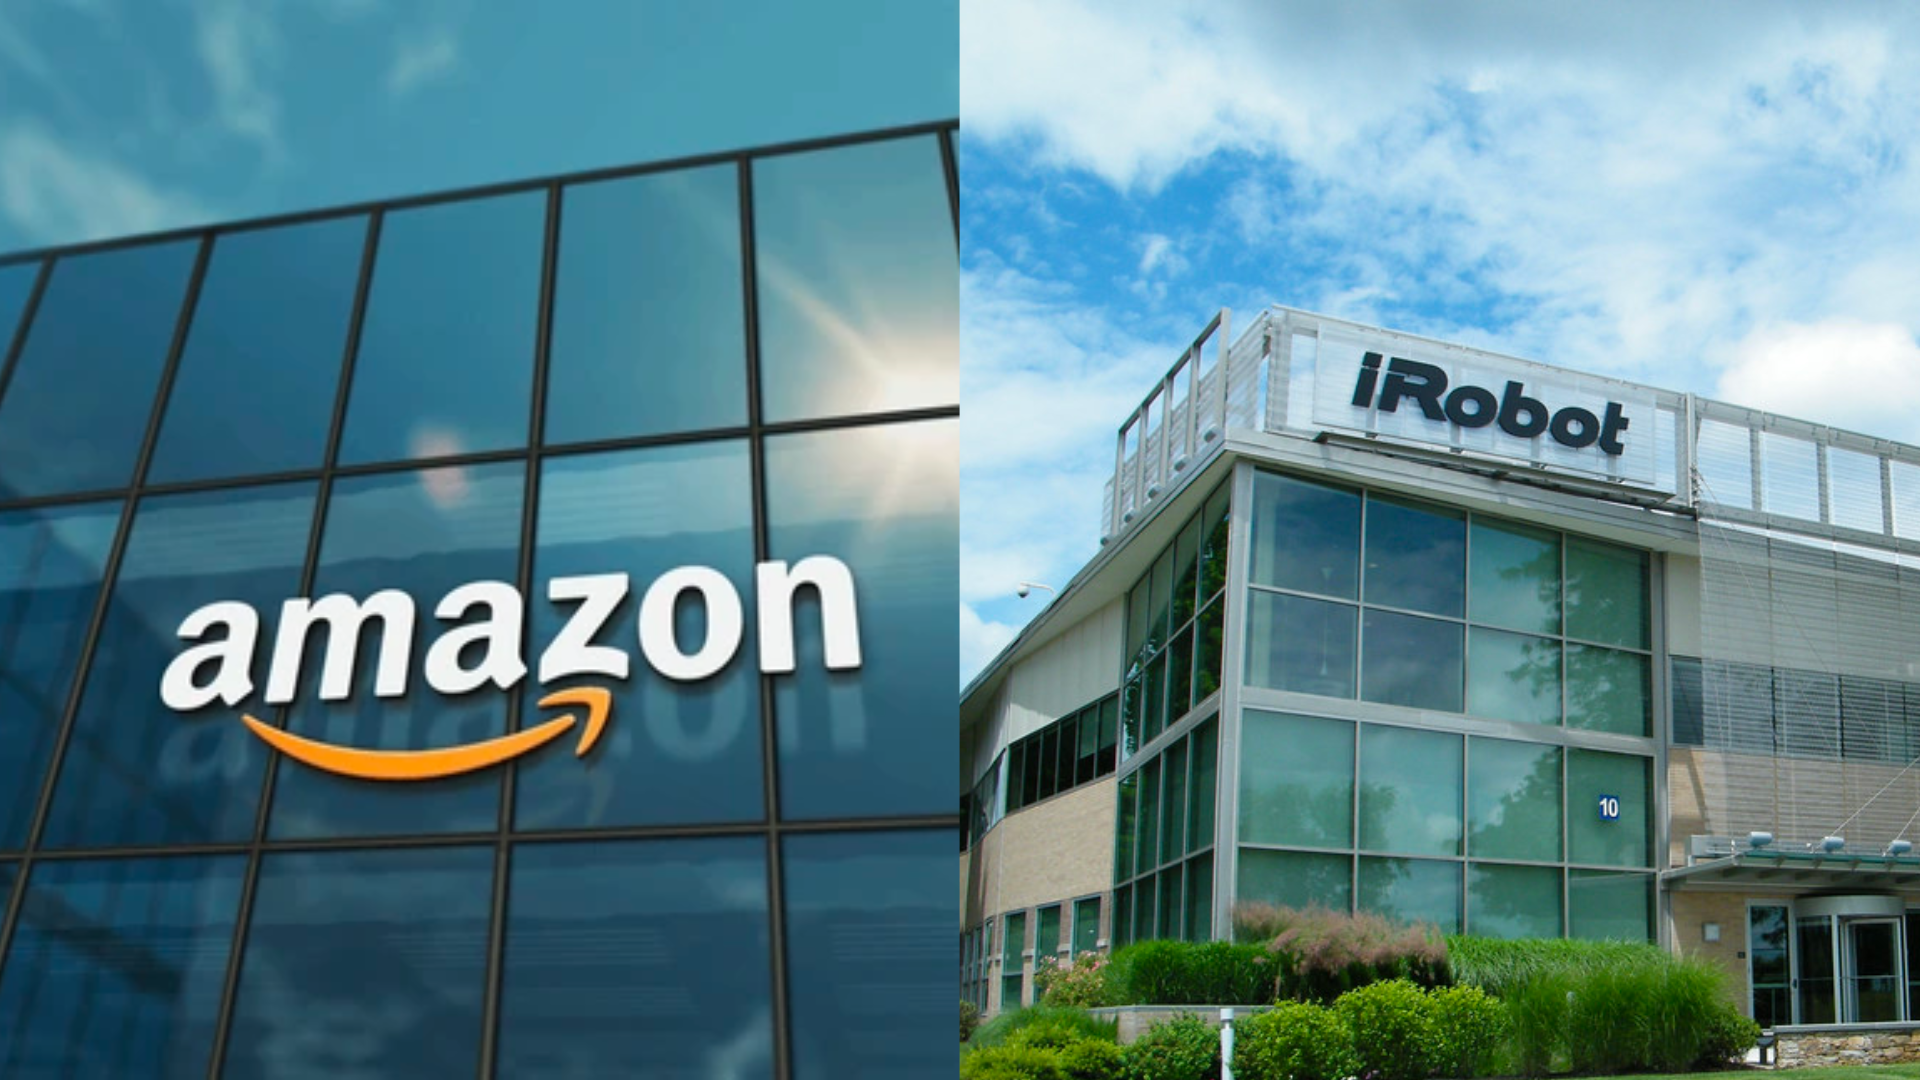 Amazon Abandons iRobot Vacuum Maker Acquisition Following EU Objections